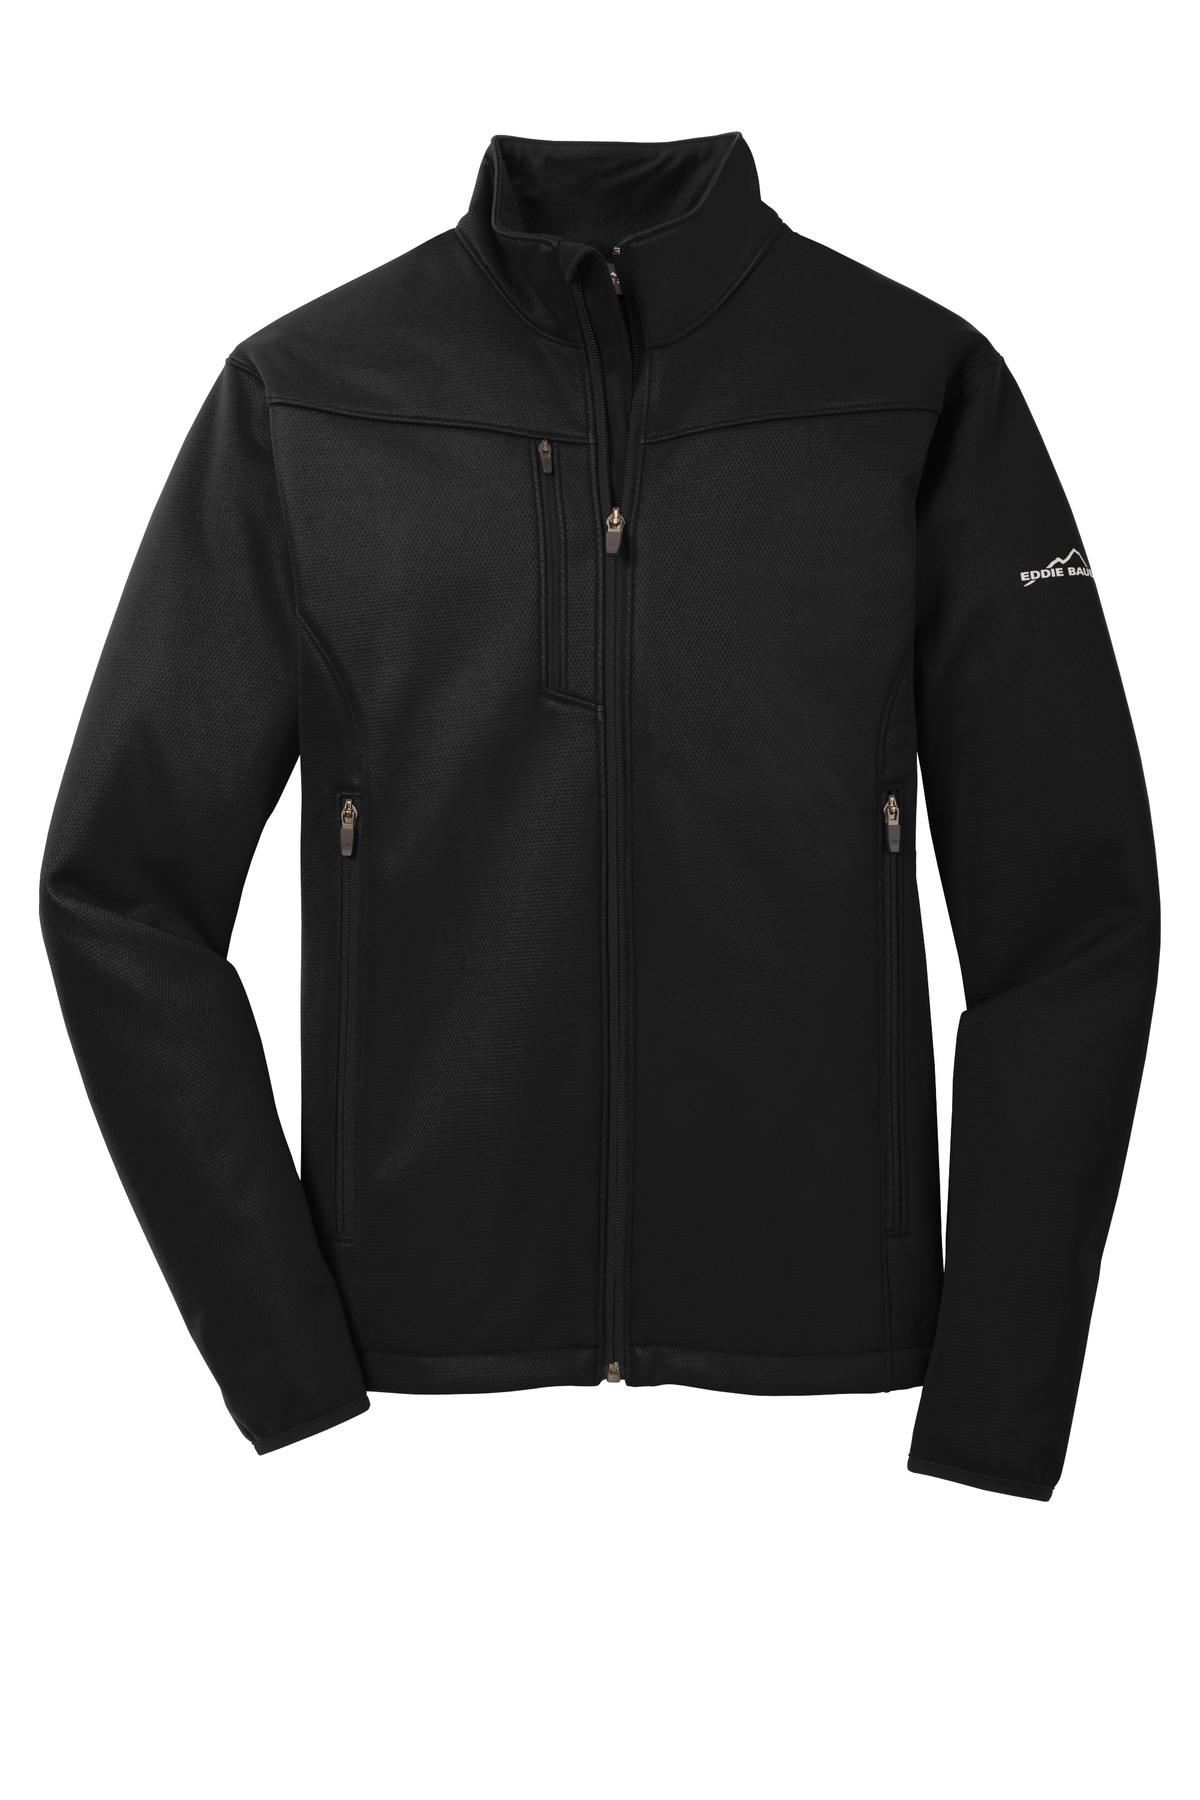 Eddie Bauer ® Weather-Resist Soft Shell Jacket. EB538 - Custom Shirt Shop